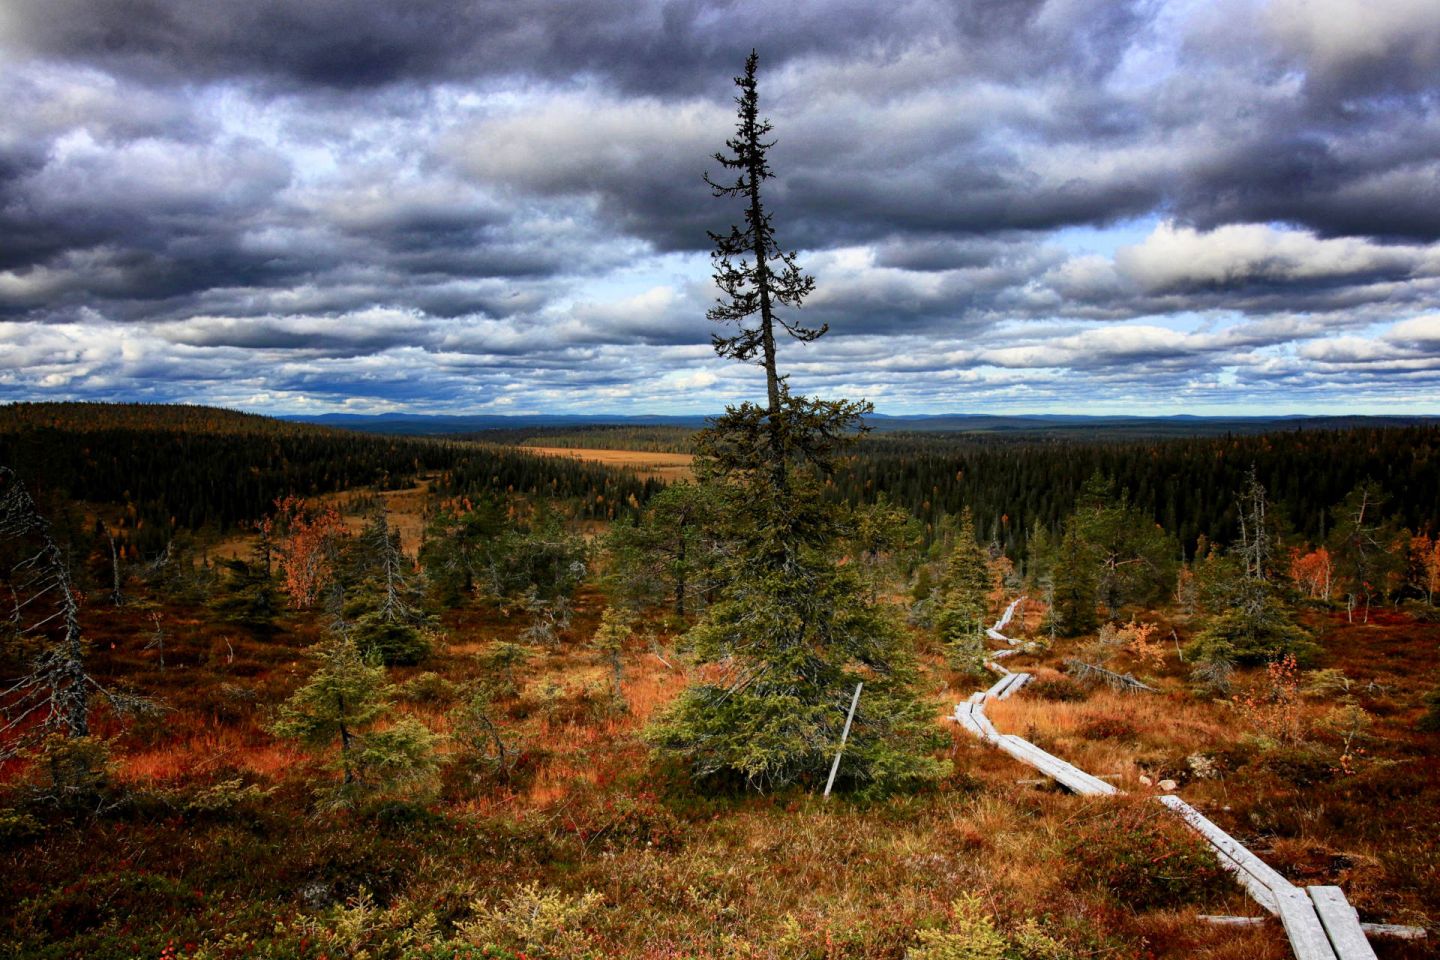 Riisitunturi National Park in Posio, Finland in autumn